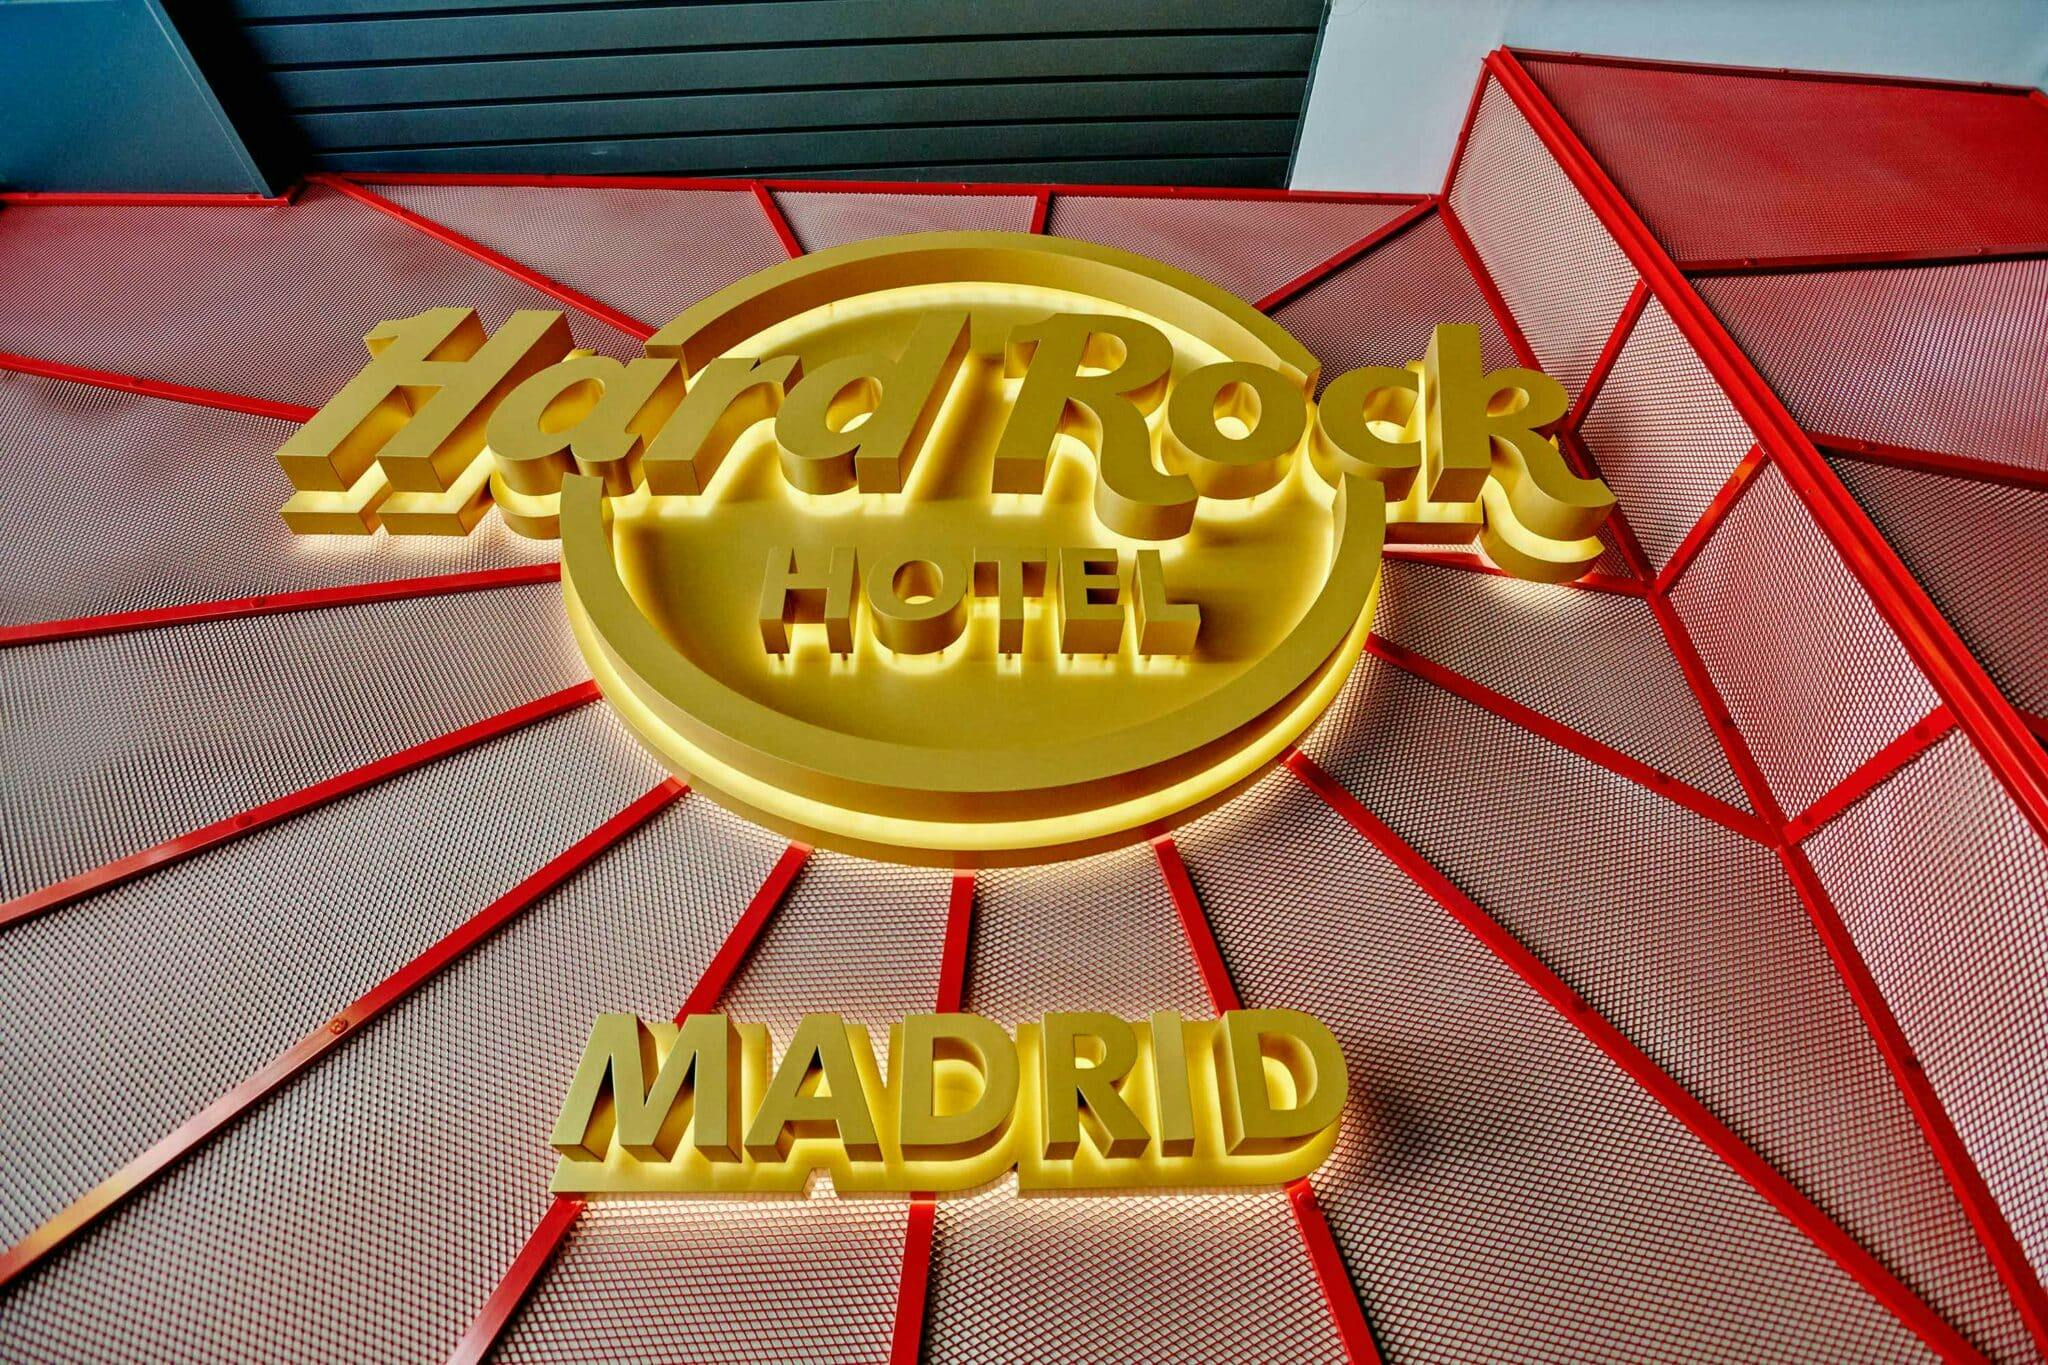 Numéro d'image 53 de la section actuelle de Hard Rock Hotel Madrid de Cosentino Canada